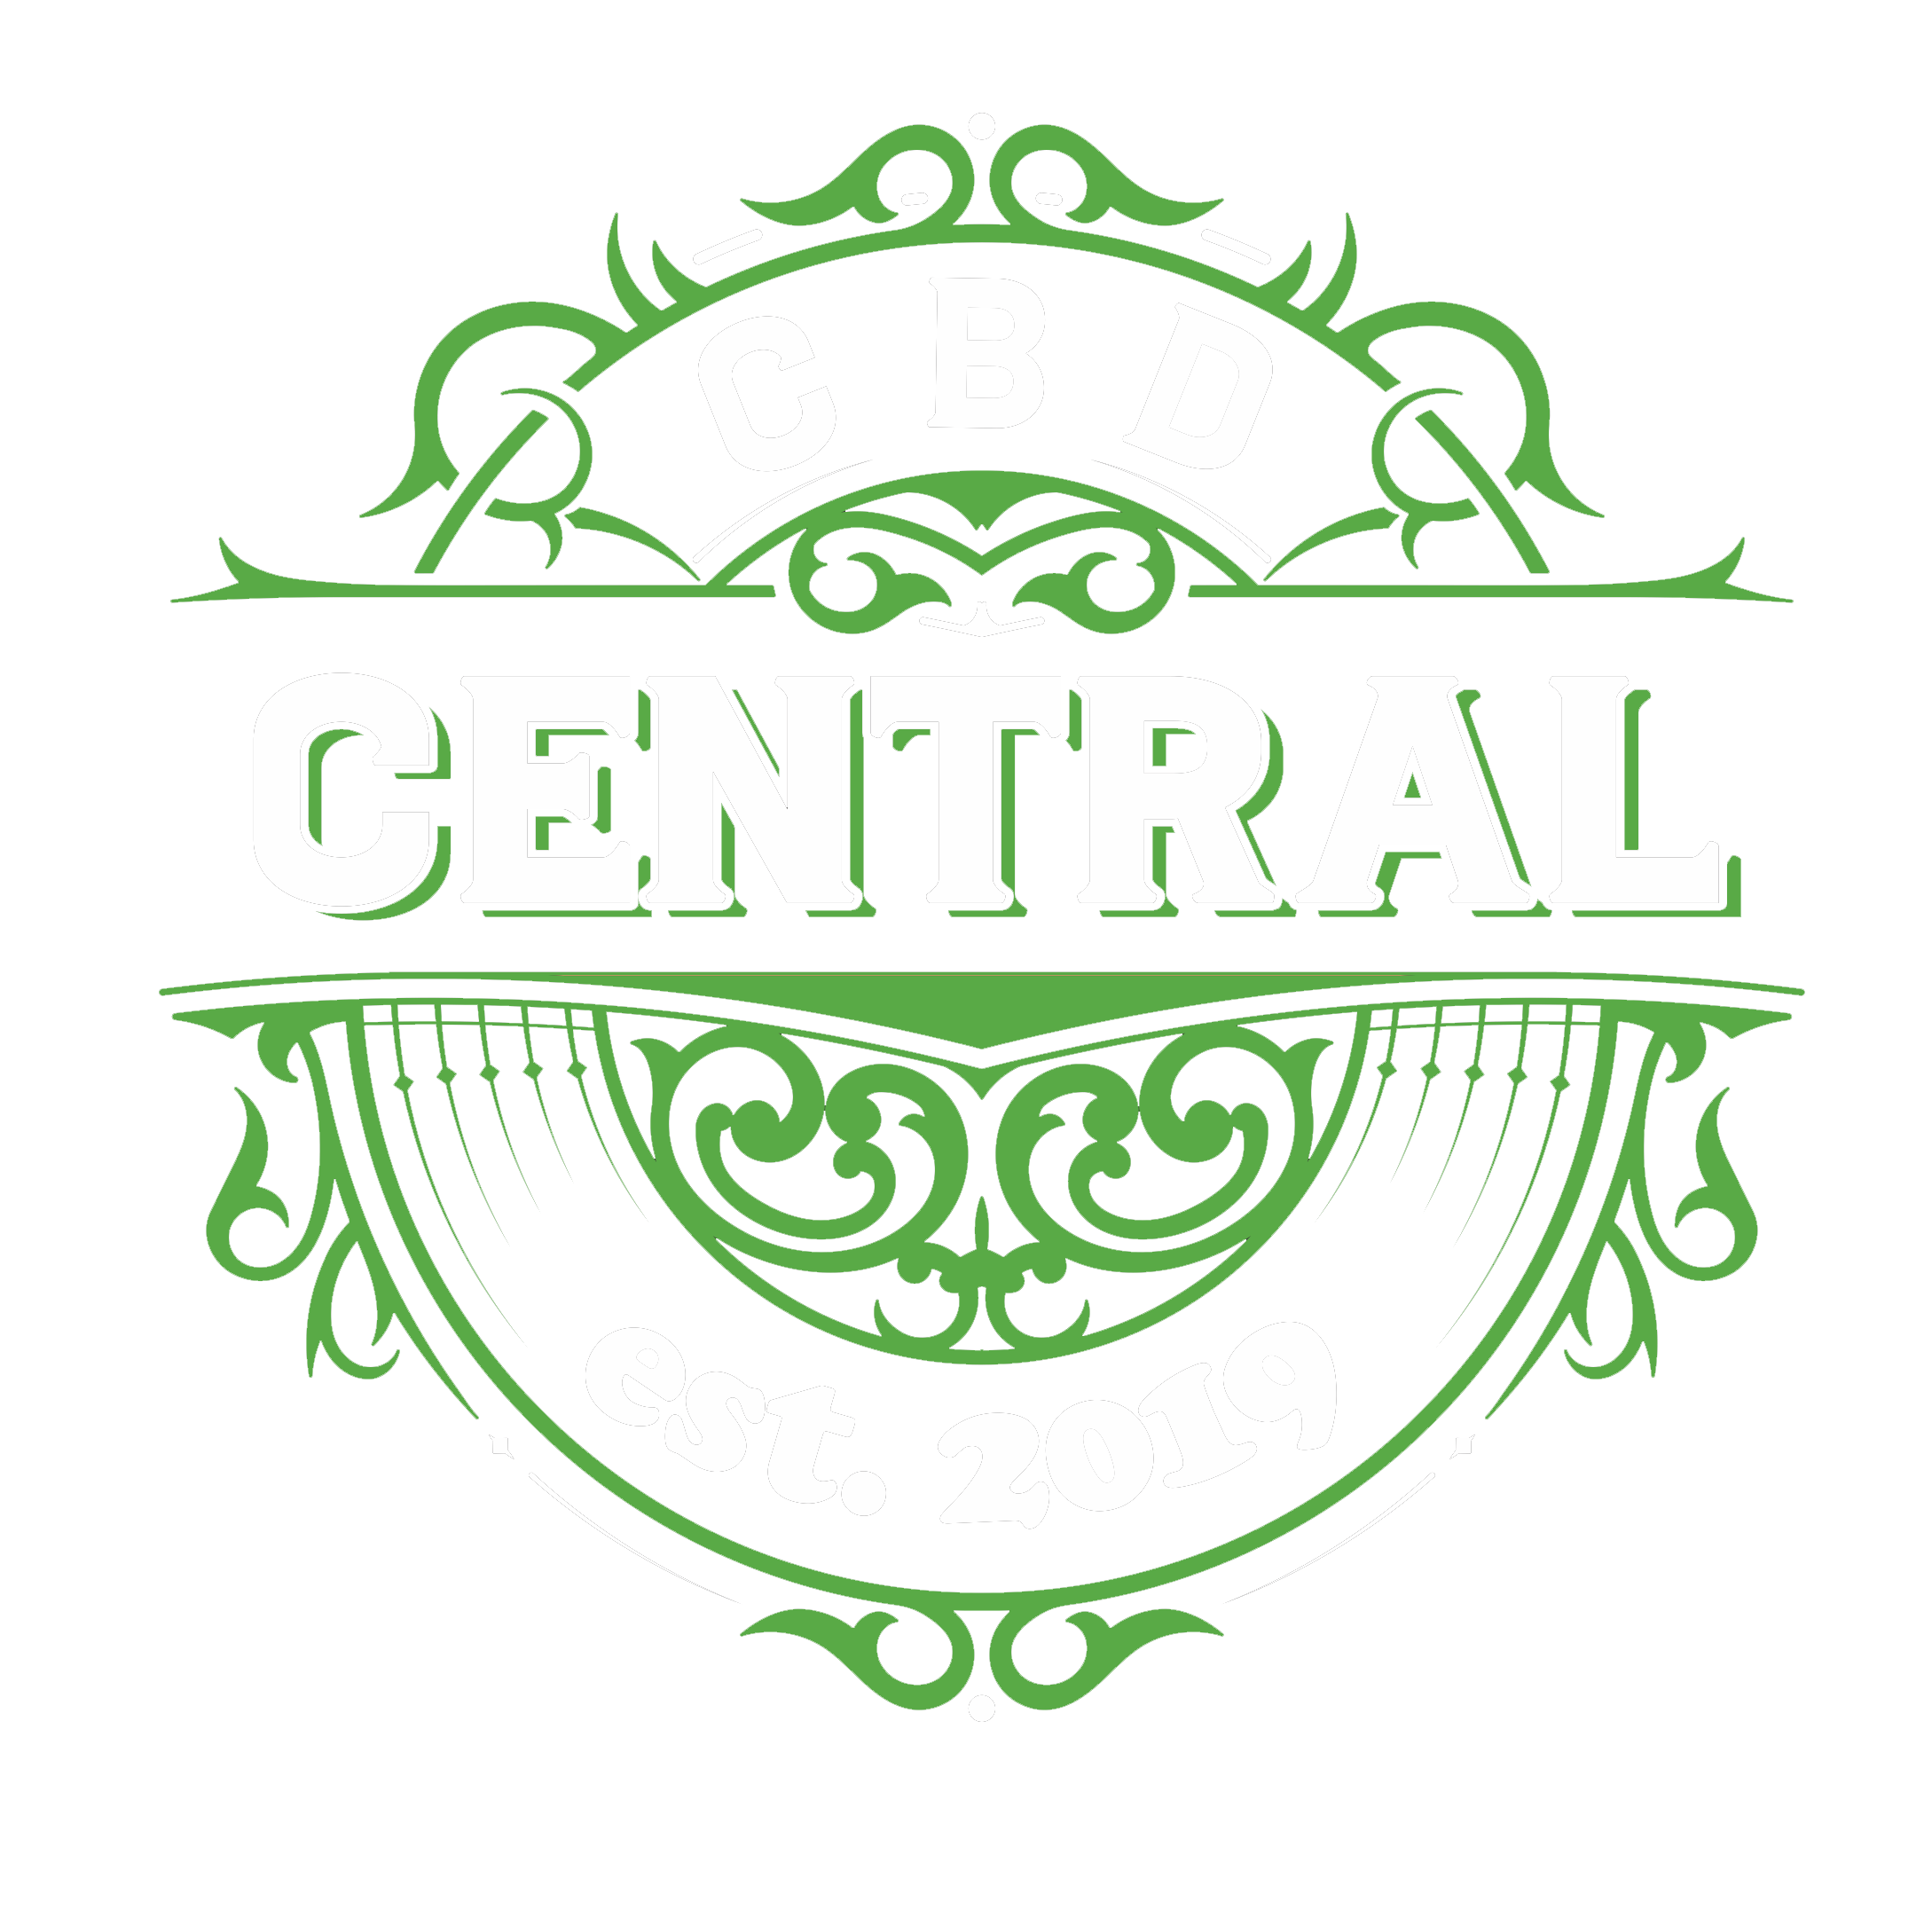 CBD Central Health & Wellness CBD Store in Gallatin, TN Logo